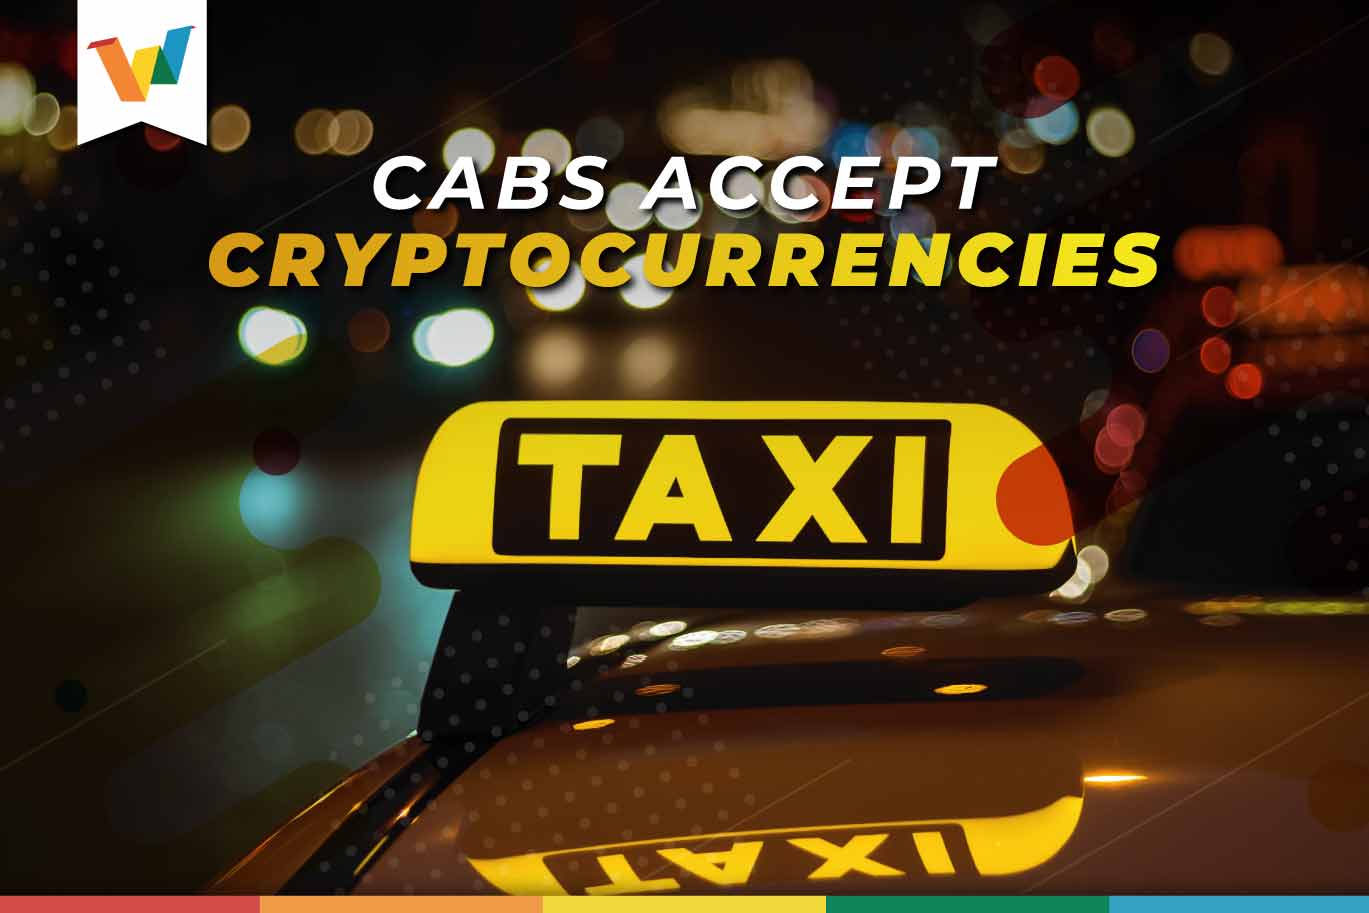 Cabs accept cryptocurrencies